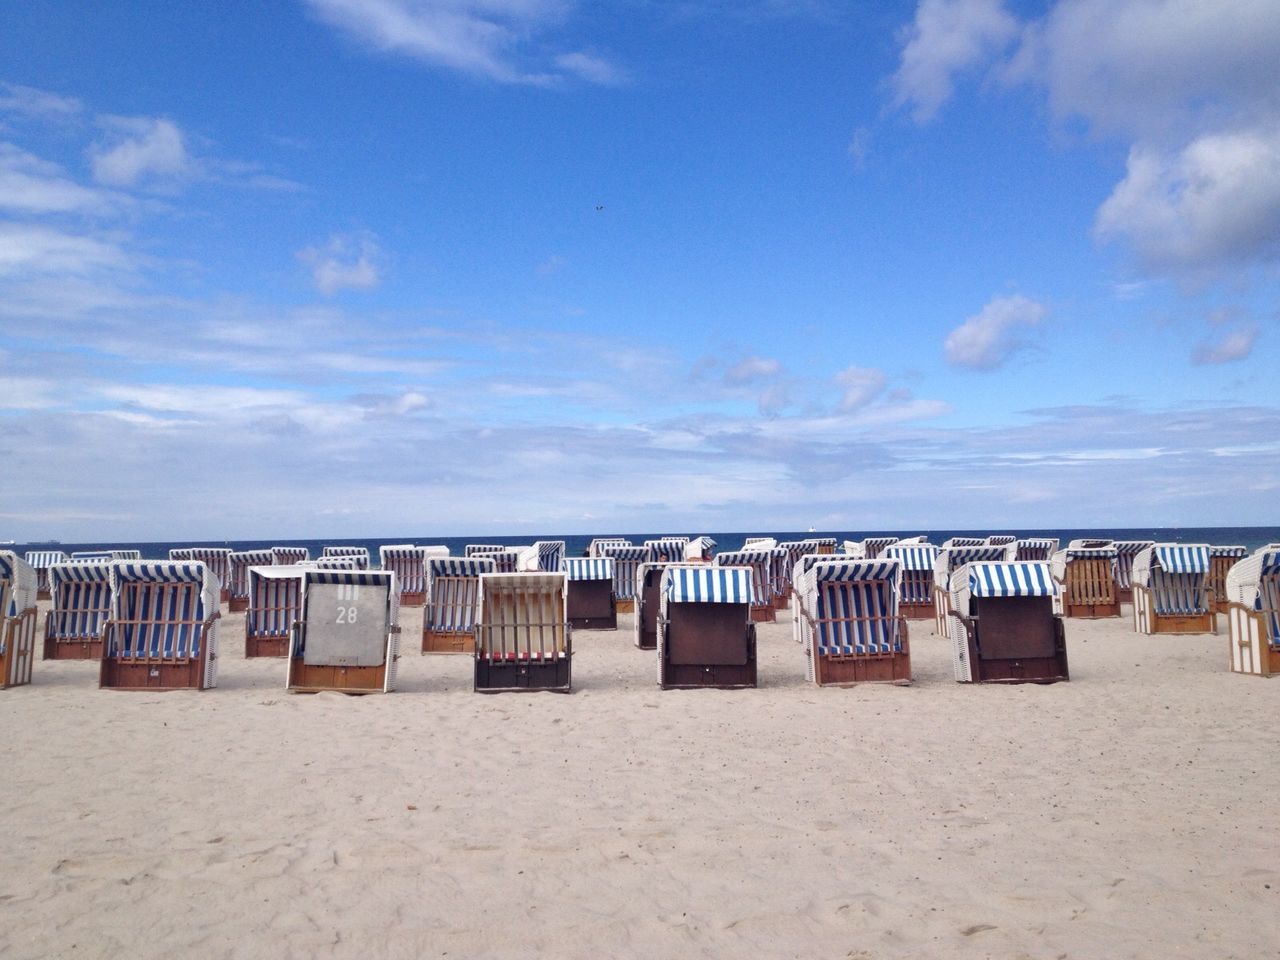 Hooded beach chairs on sand against sky